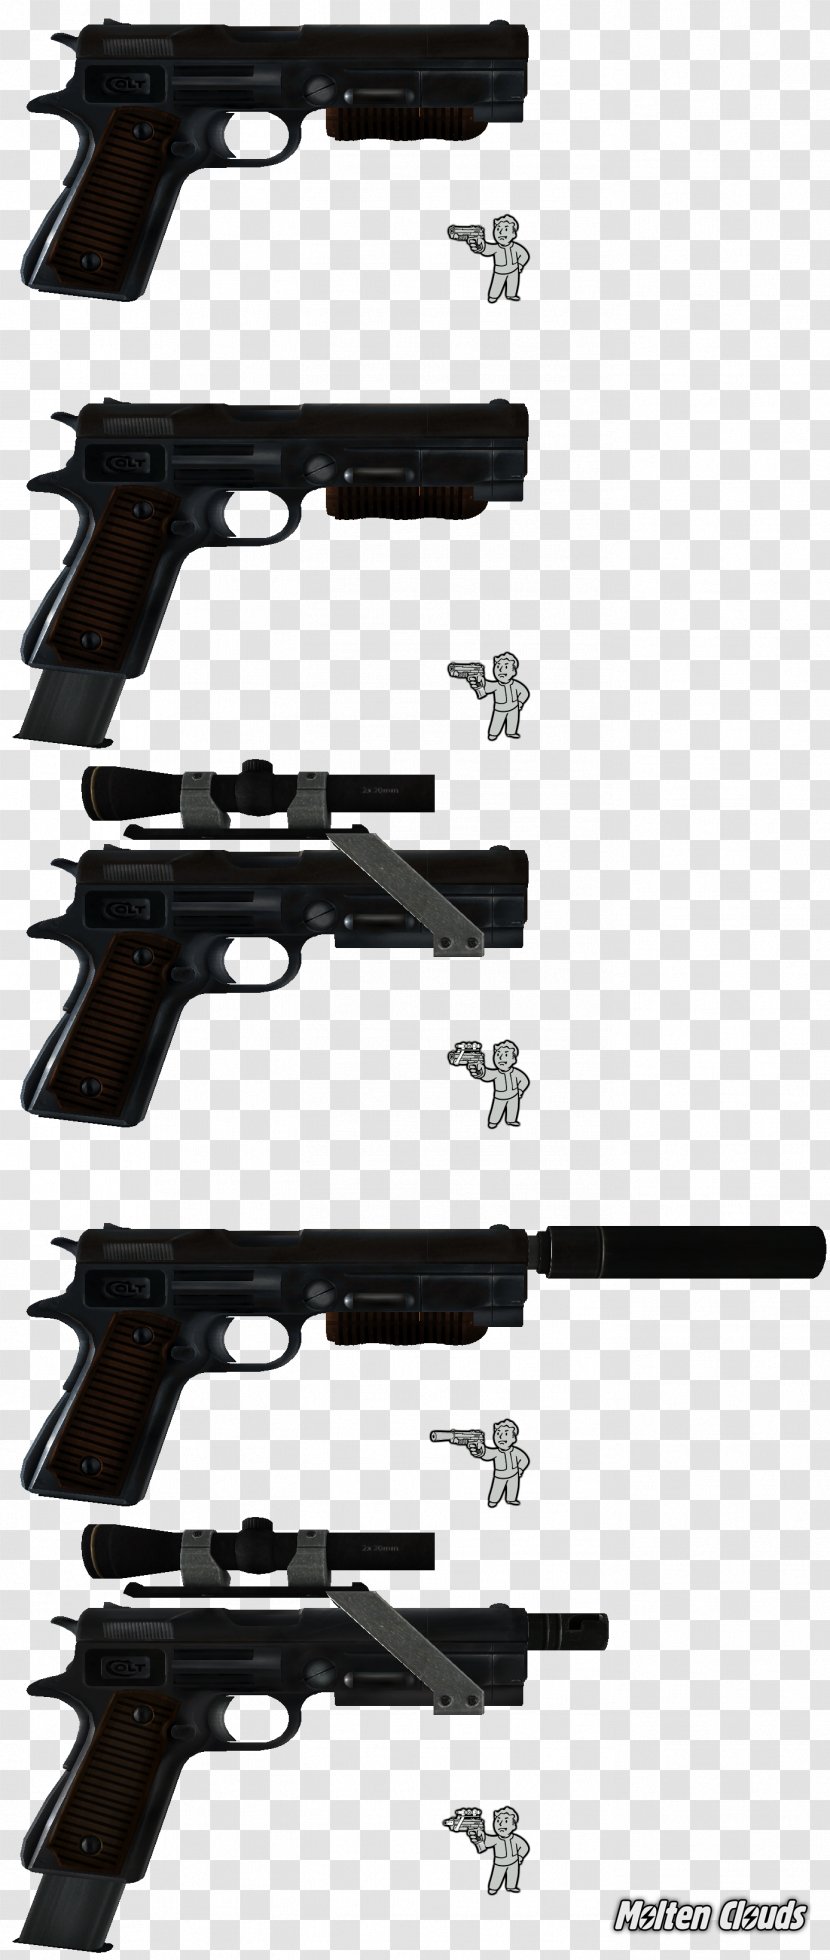 Trigger Firearm Air Gun DAX MONTHLY HEDGED TR JPY - Watercolor - Handgun Transparent PNG